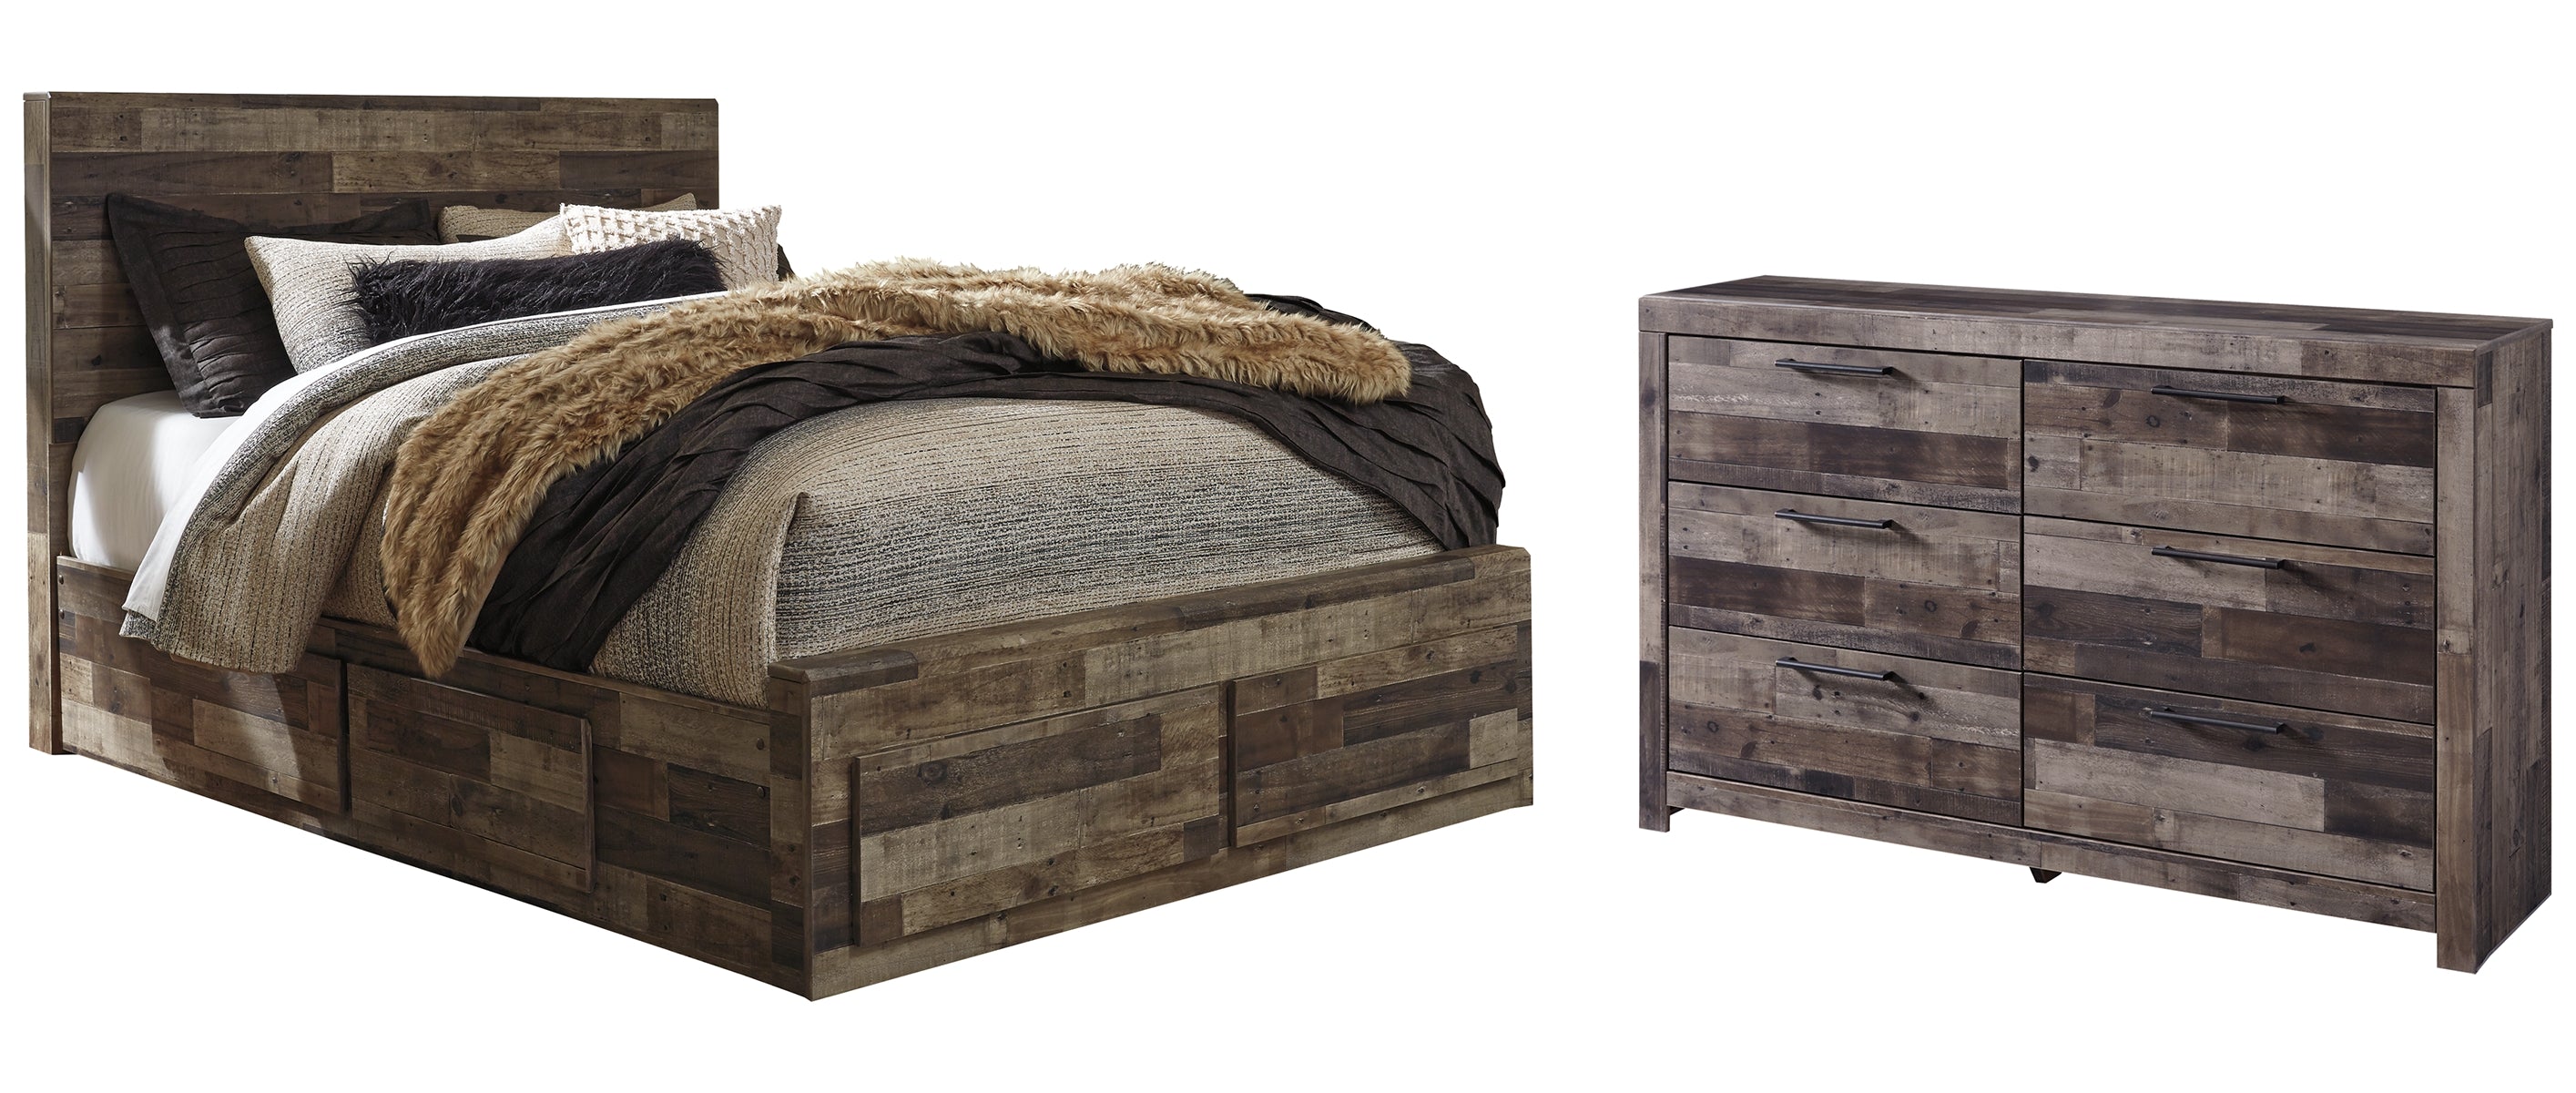 Derekson Queen Panel Bed with 6 Storage Drawers with Dresser